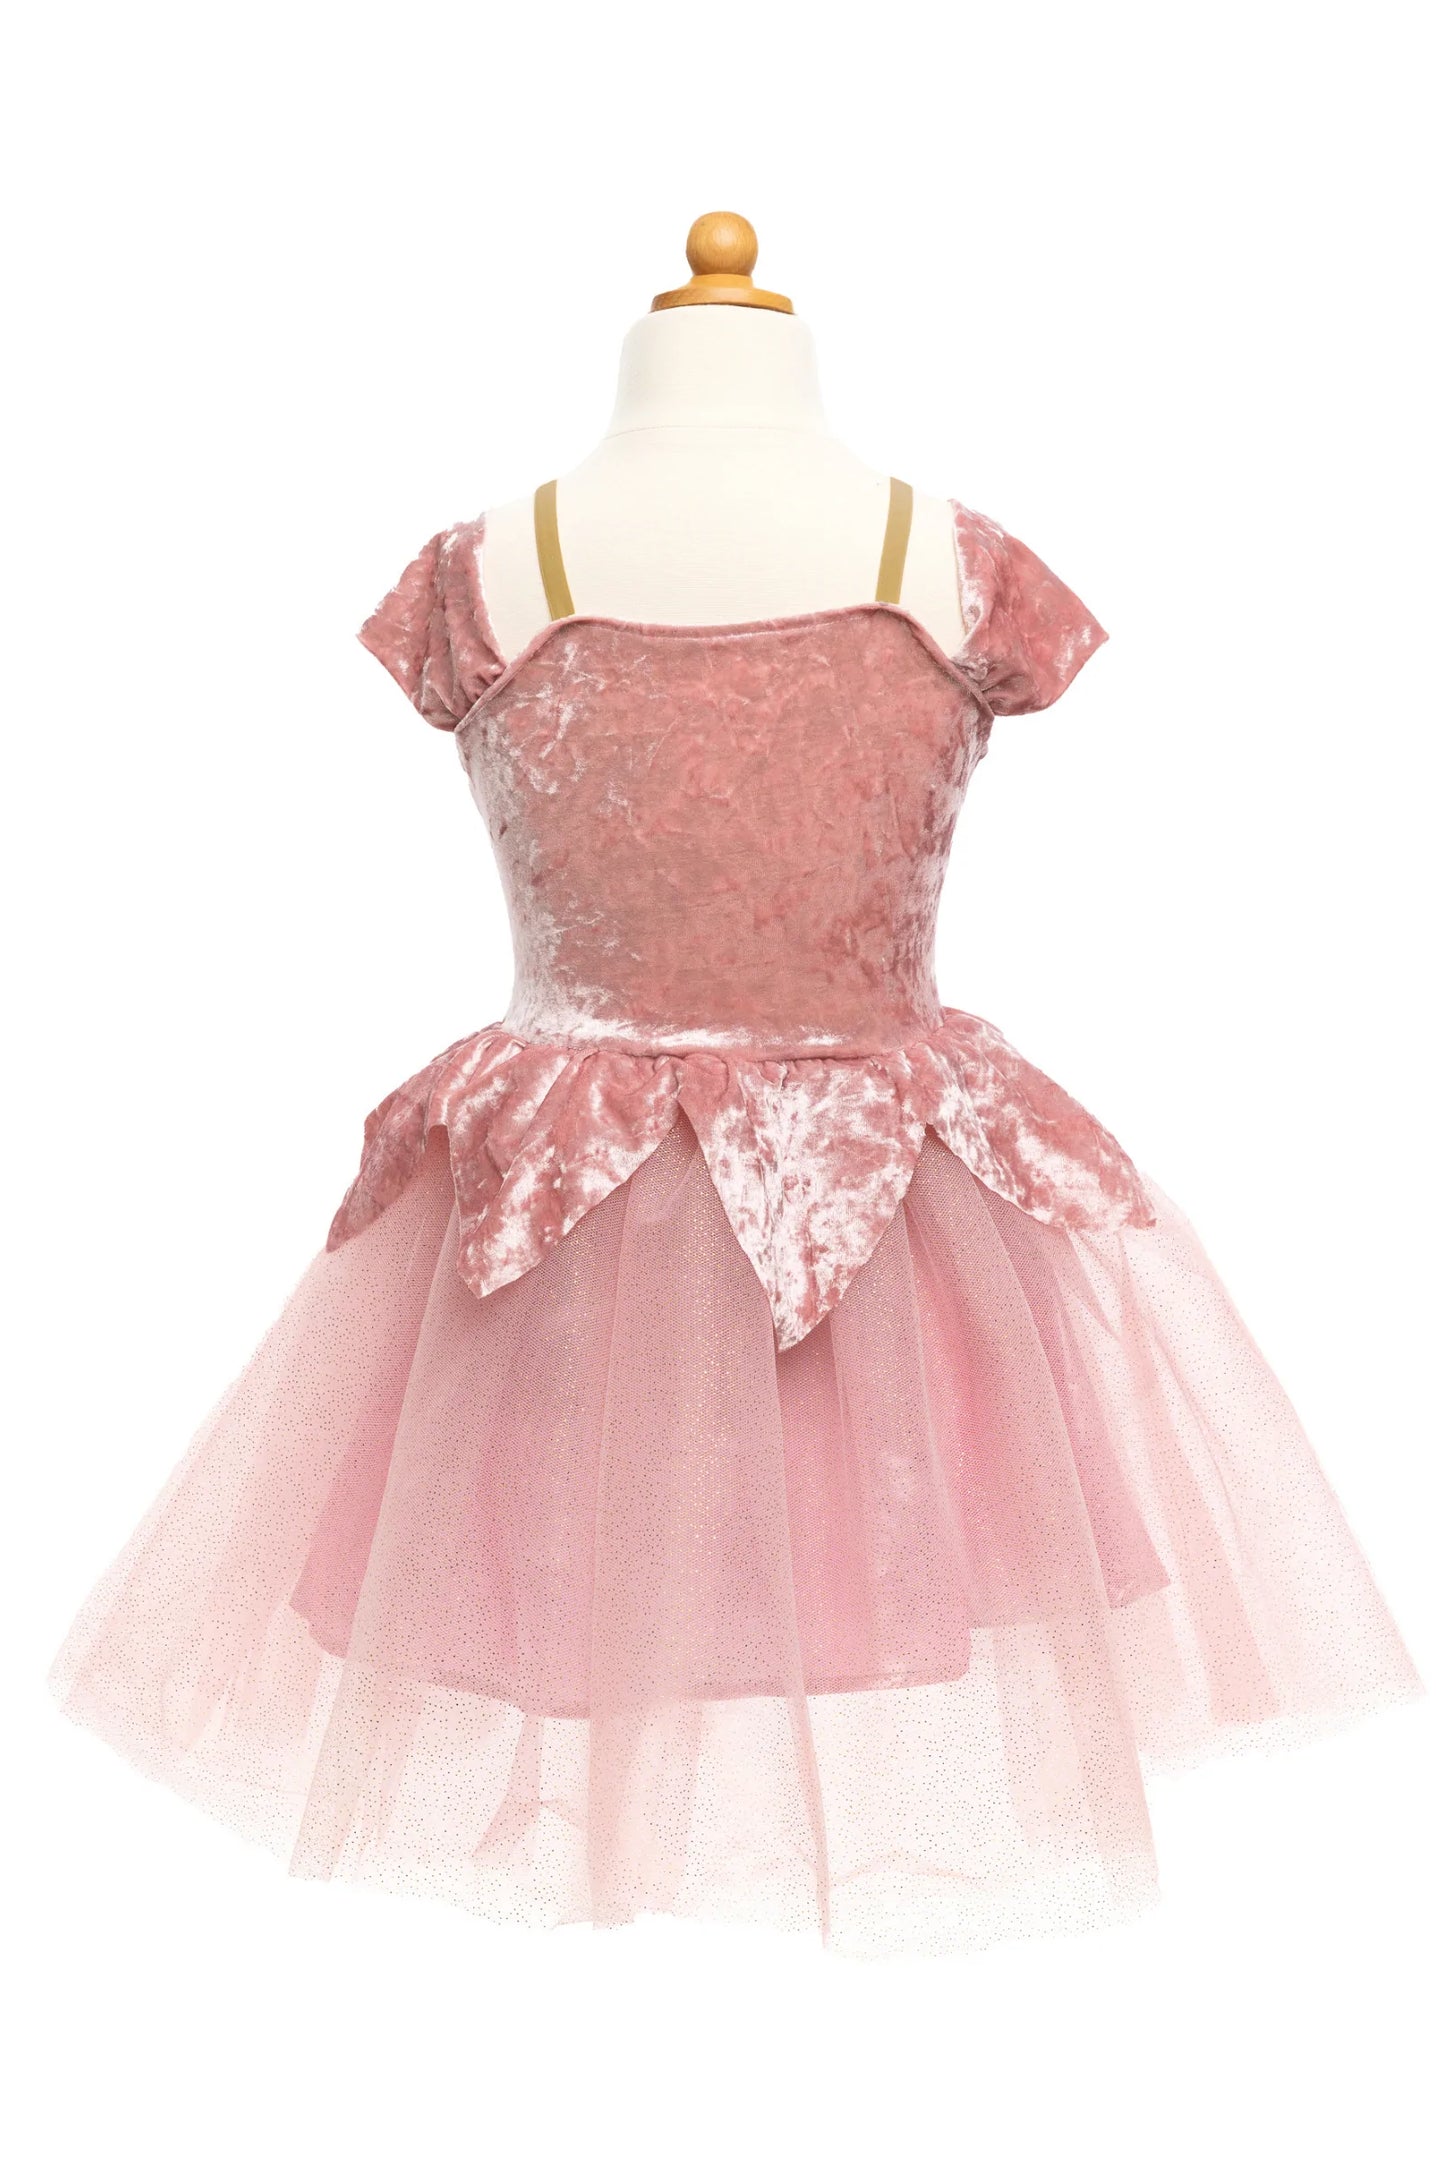 Dress Up - Prima Ballerina Dress (Dusty Rose)